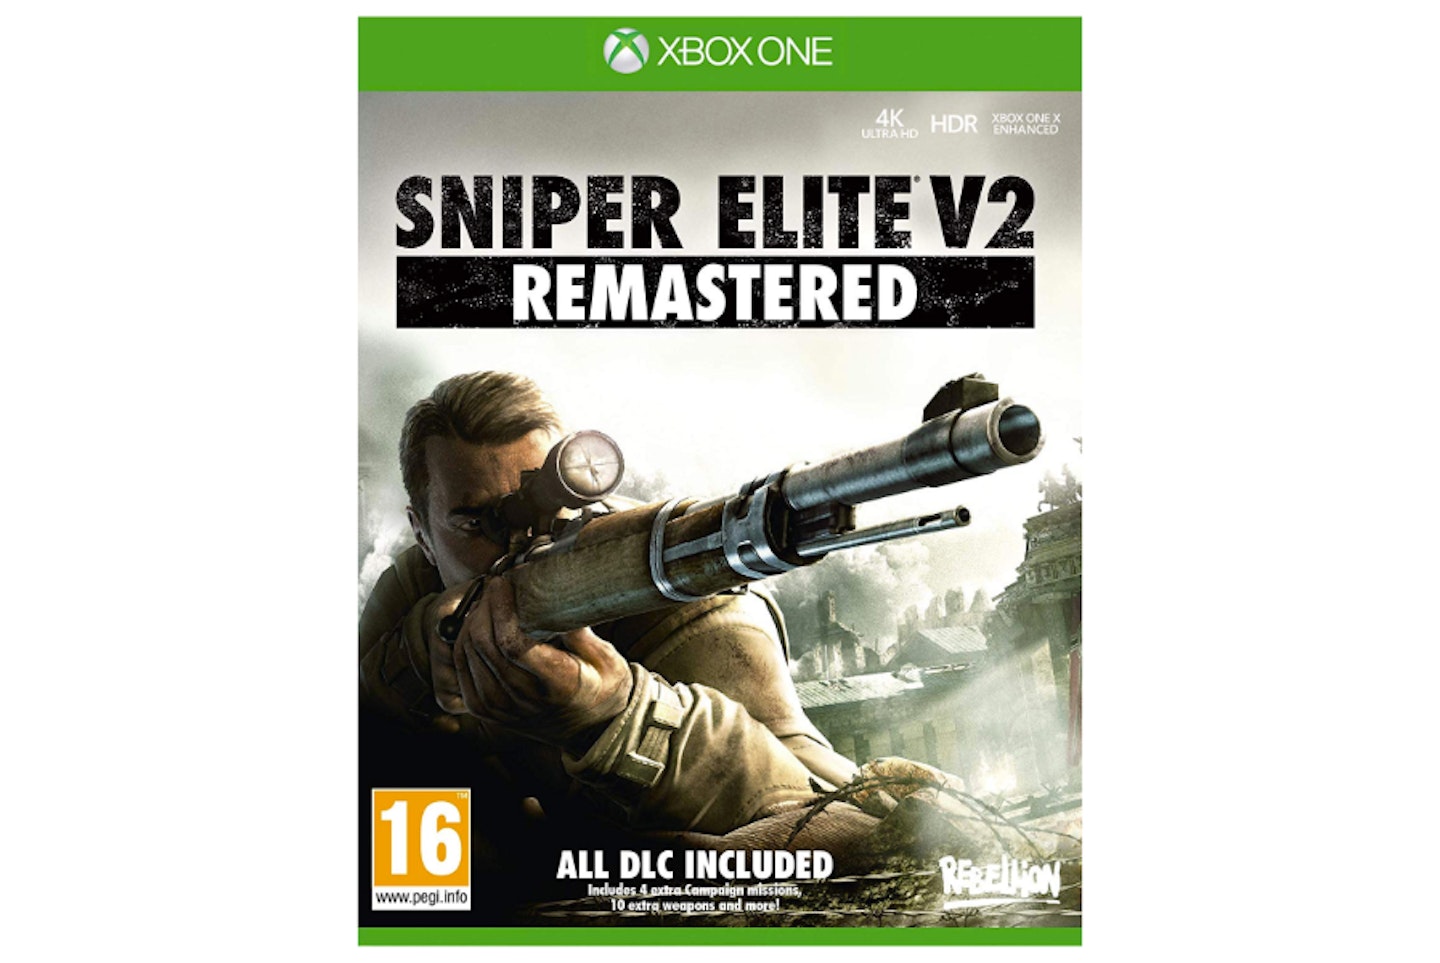 Sniper Elite V2 Remastered, £19.99